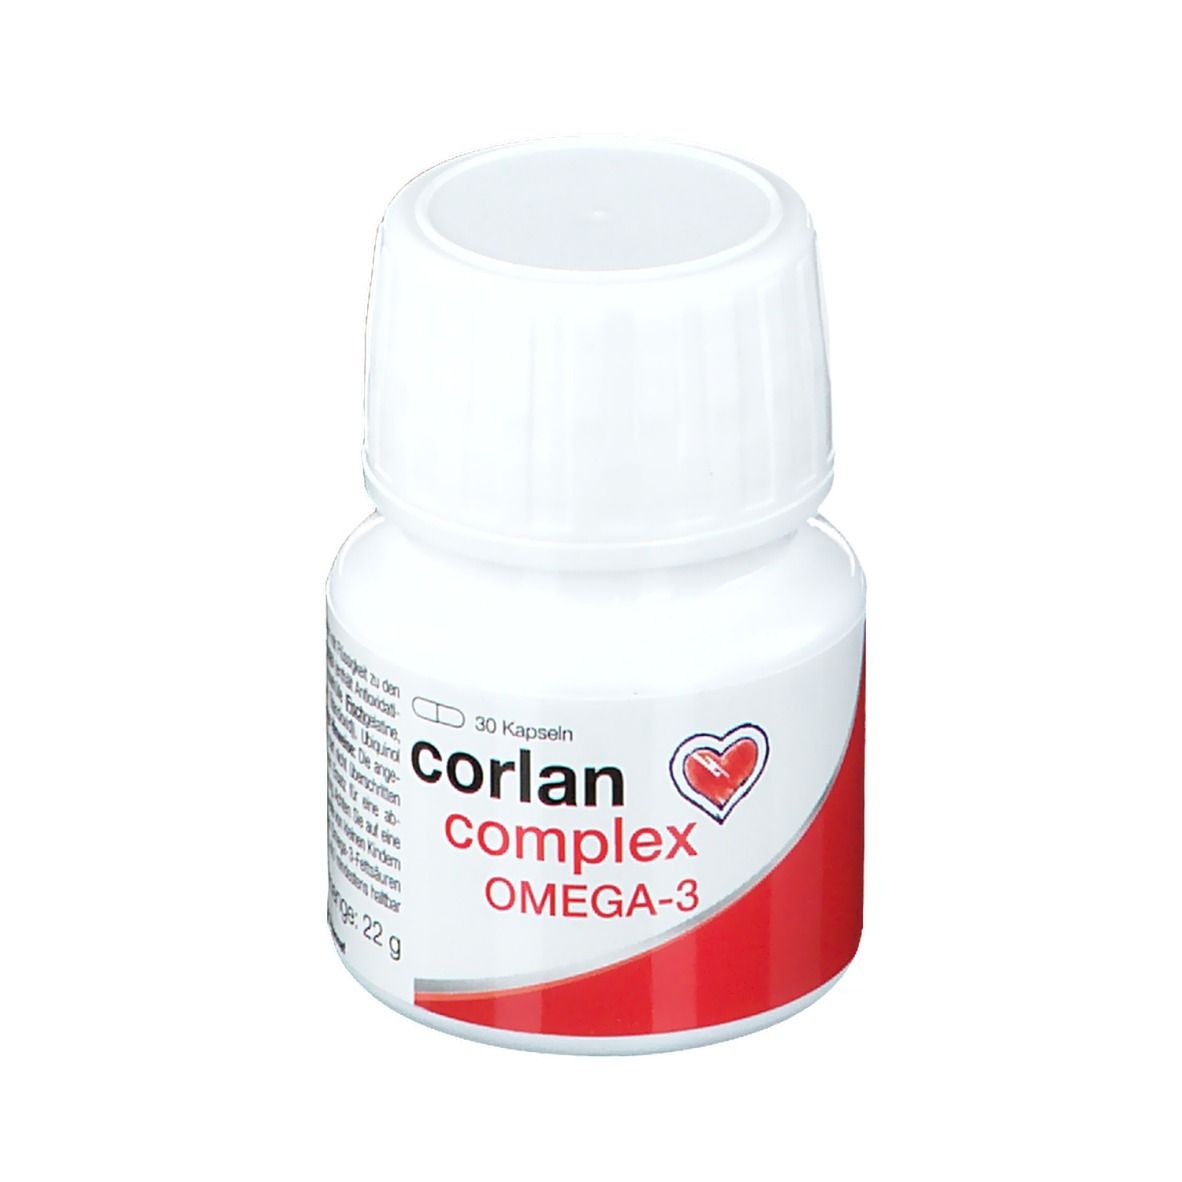 corlan complex OMEGA-3